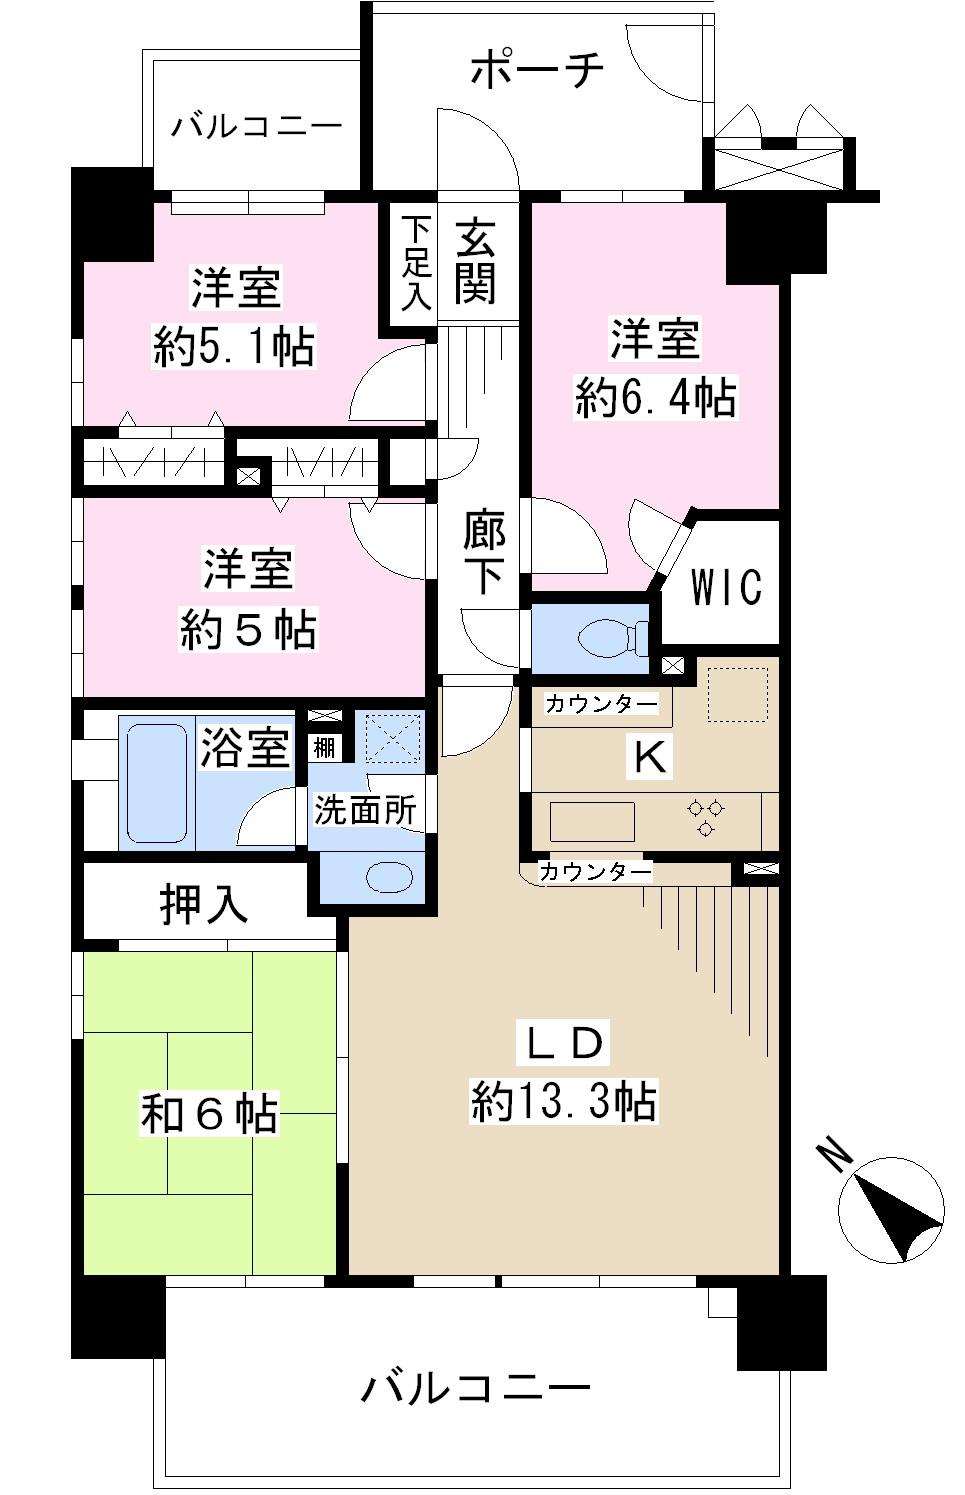 Floor plan. 4LDK, Price 31 million yen, Occupied area 83.22 sq m , Balcony area 16.65 sq m